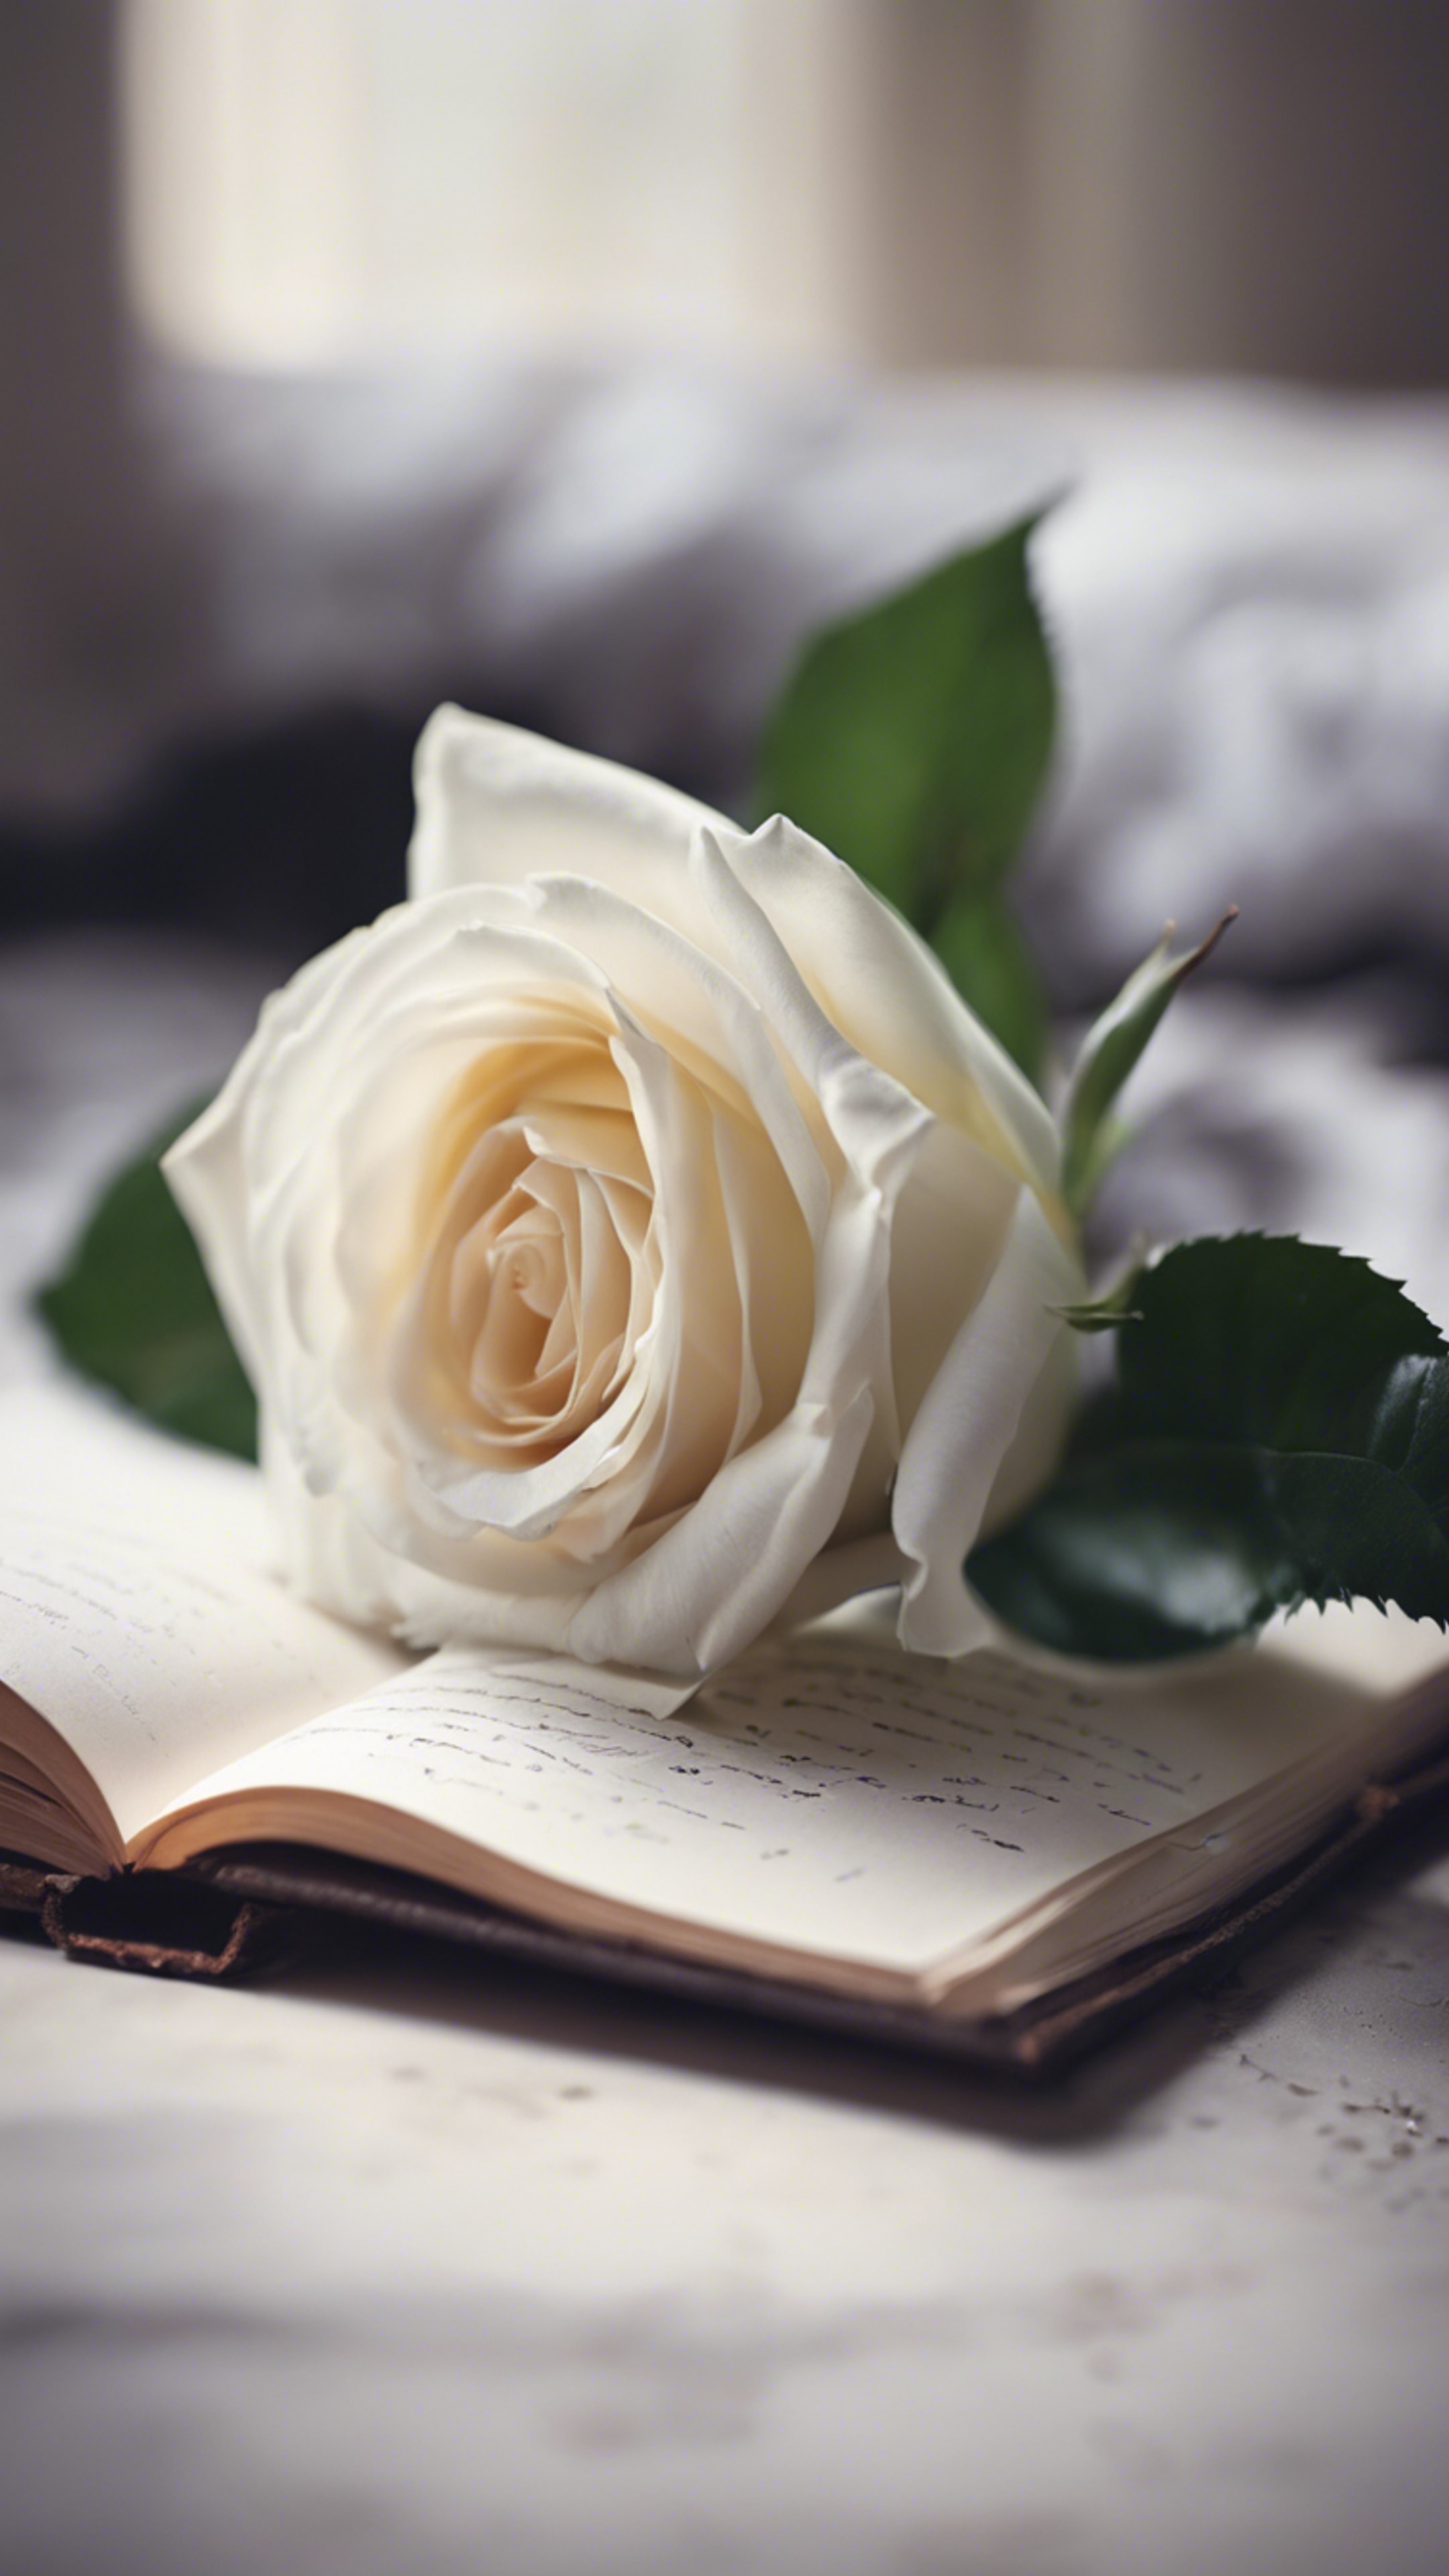 A handwritten confession of love adorned by a fresh, white rose. Шпалери[ca91da3bae694a85a8d6]